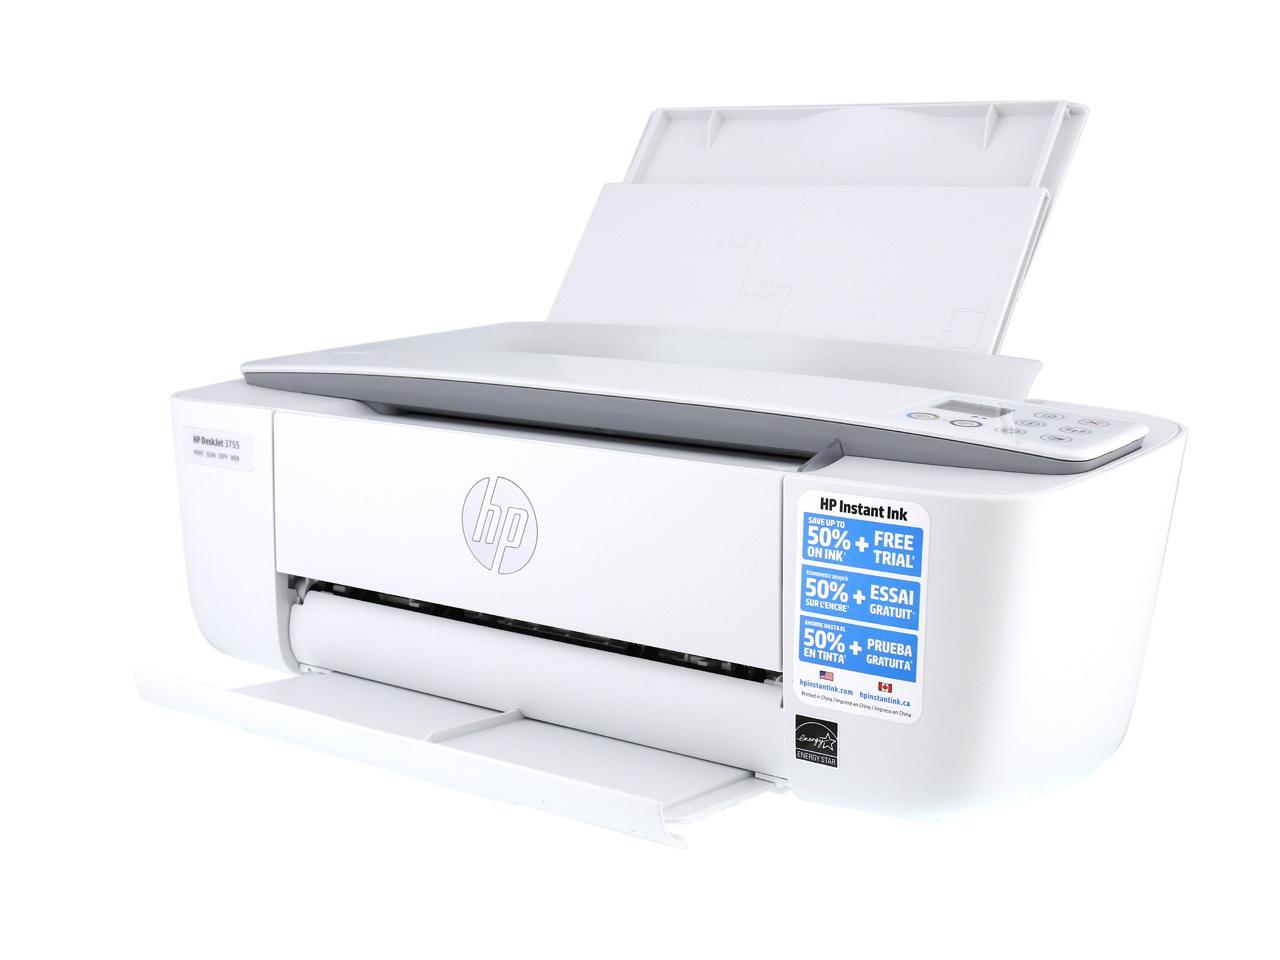 HP DeskJet 3755 All in One Wireless Color Inkjet Printer ...